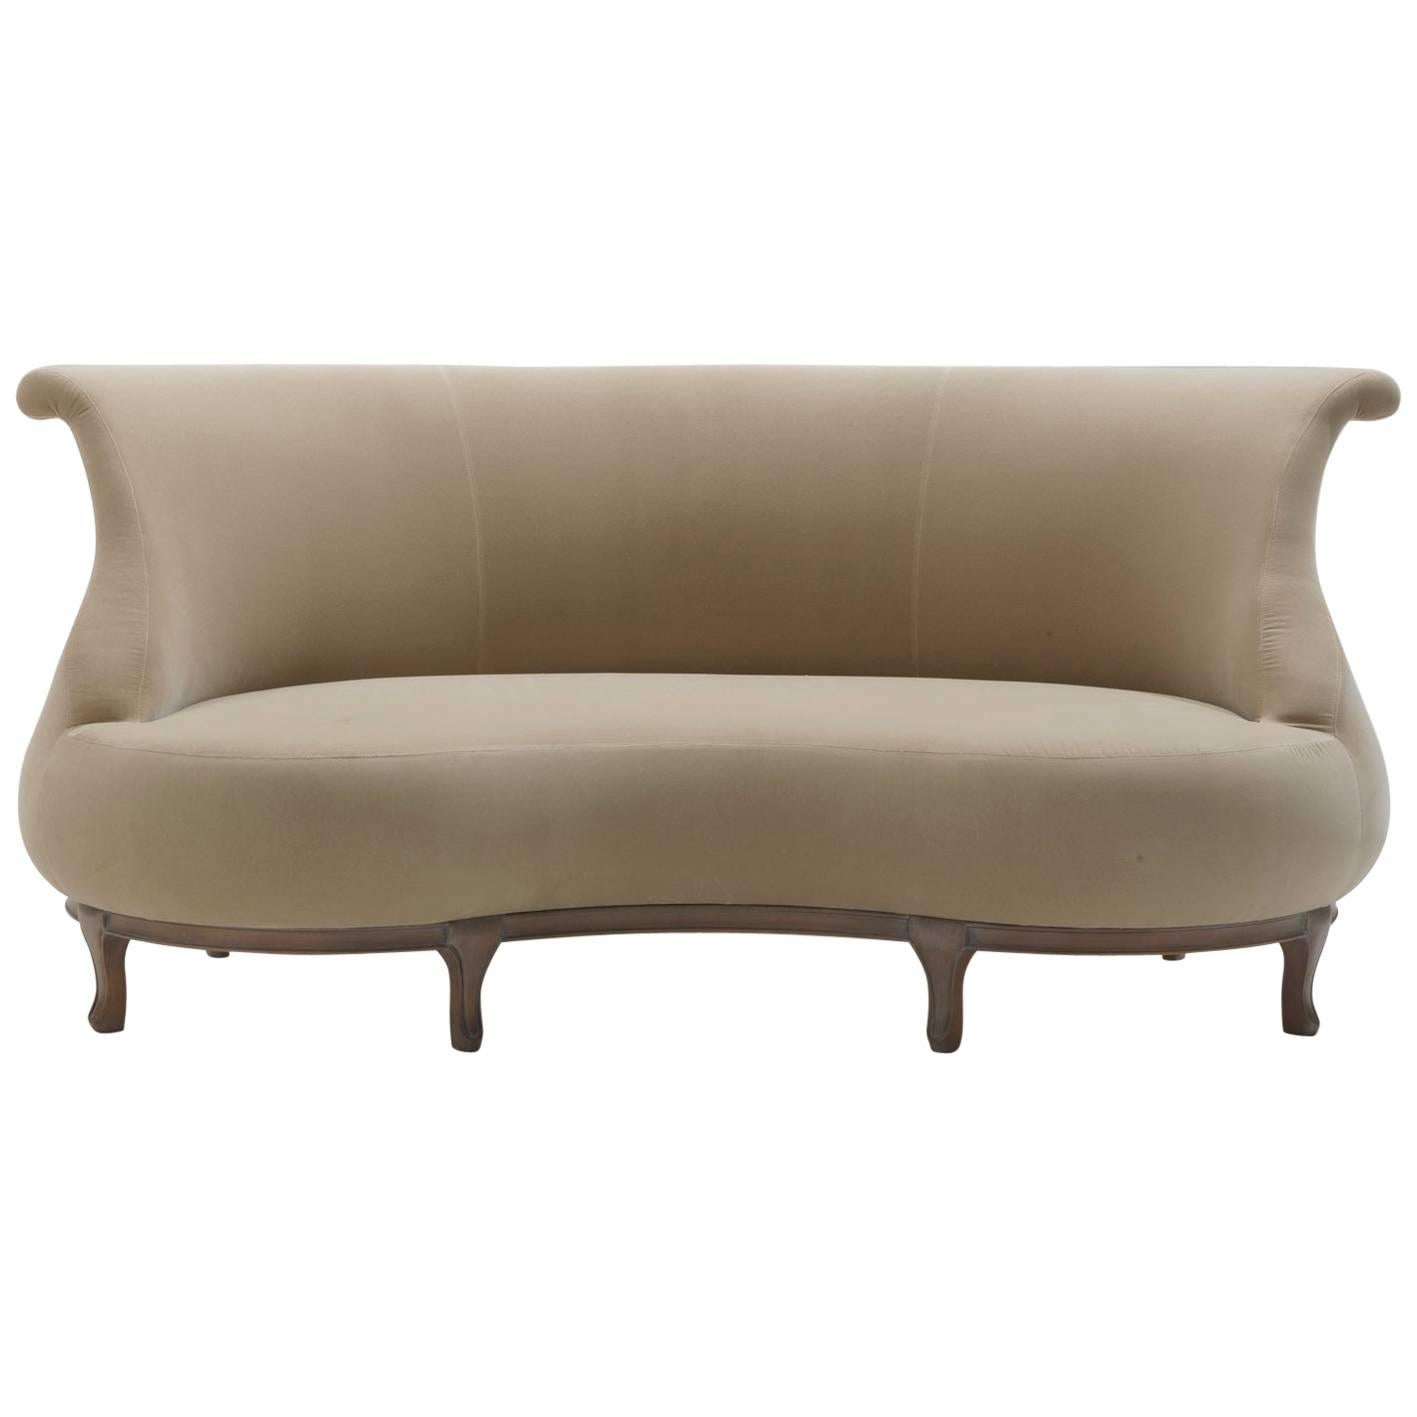 Plump -  solid walnut sofa, designed by Nigel Coates